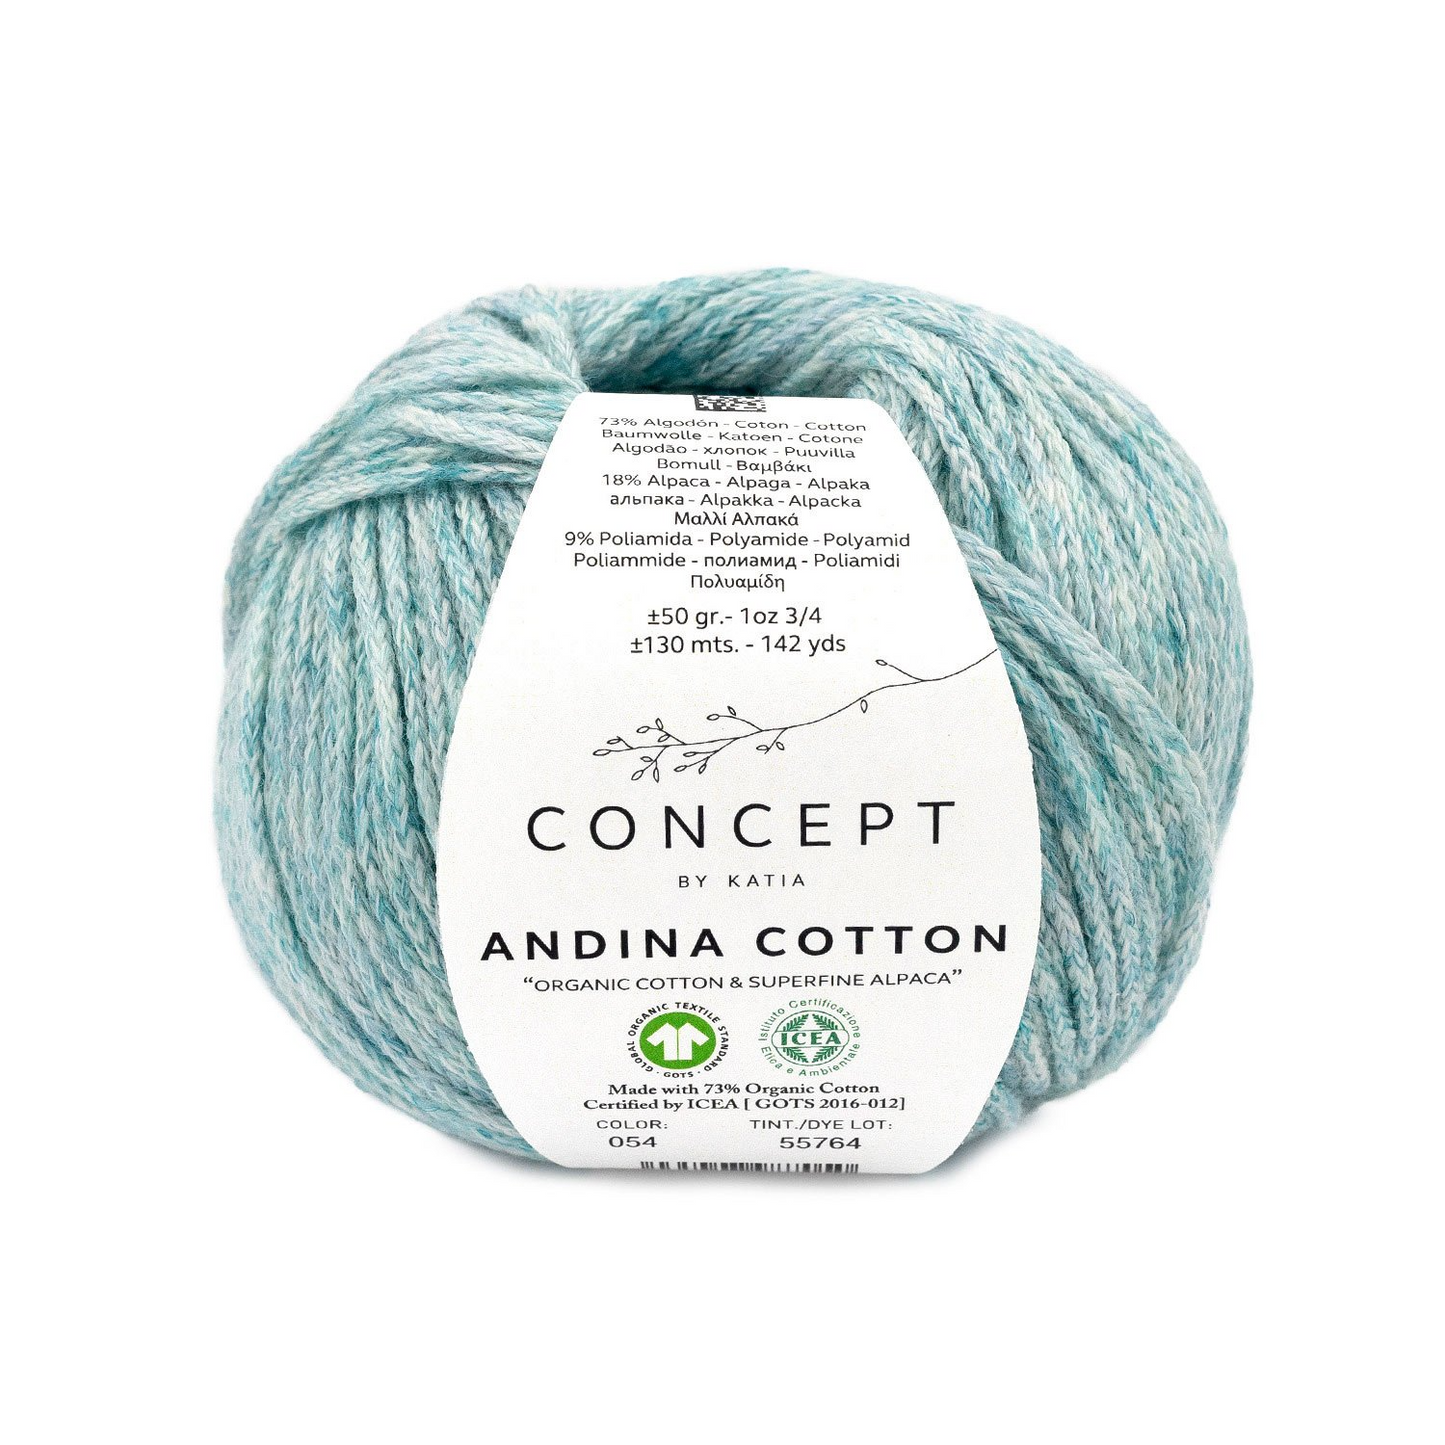 Andina Cotton de  Concept Katia